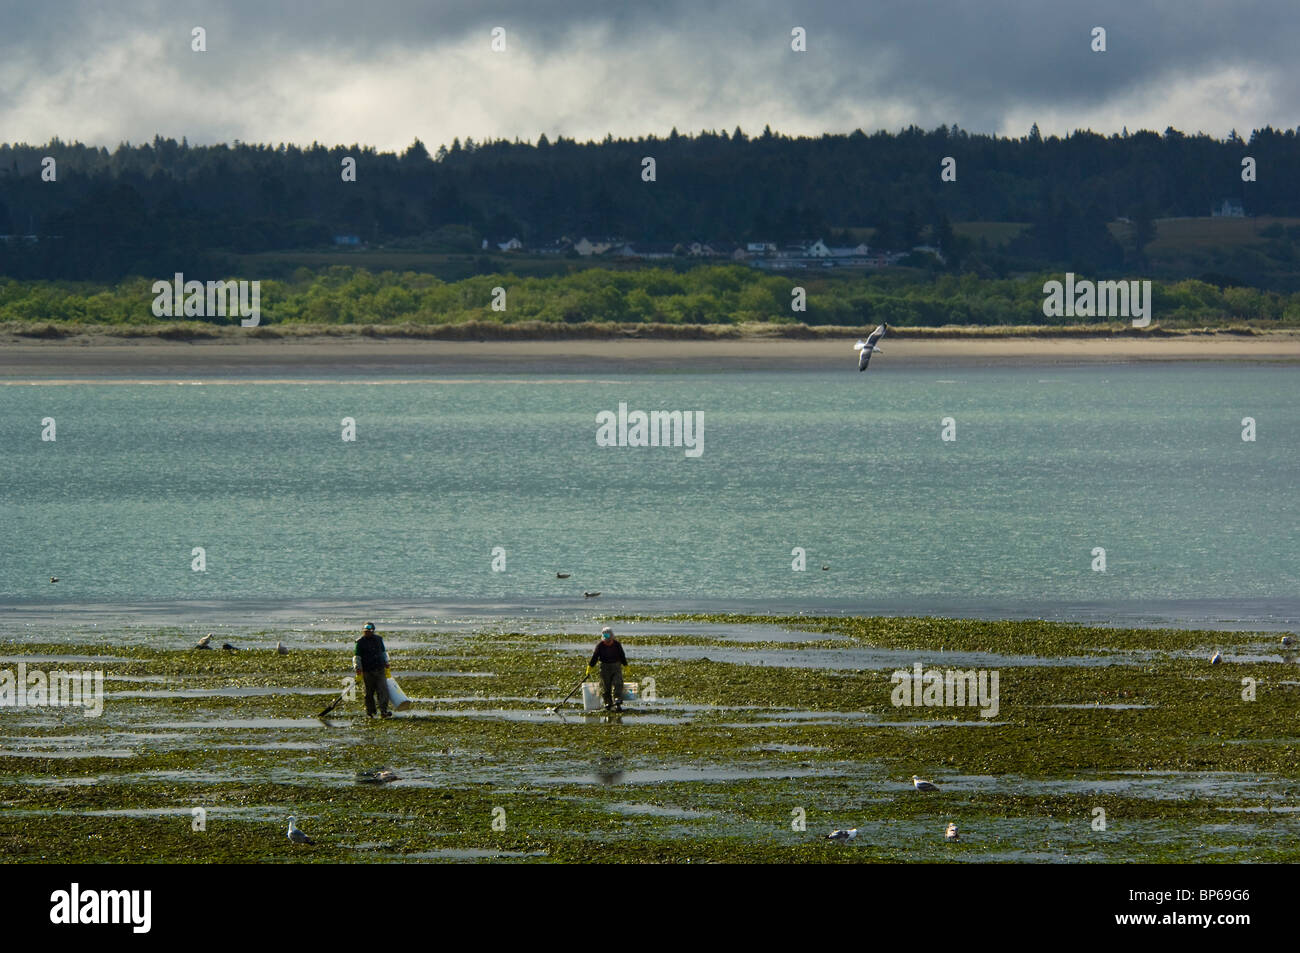 People clam digging in the tidal mud flats of Humboldt Bay, near Eureka, California Stock Photo